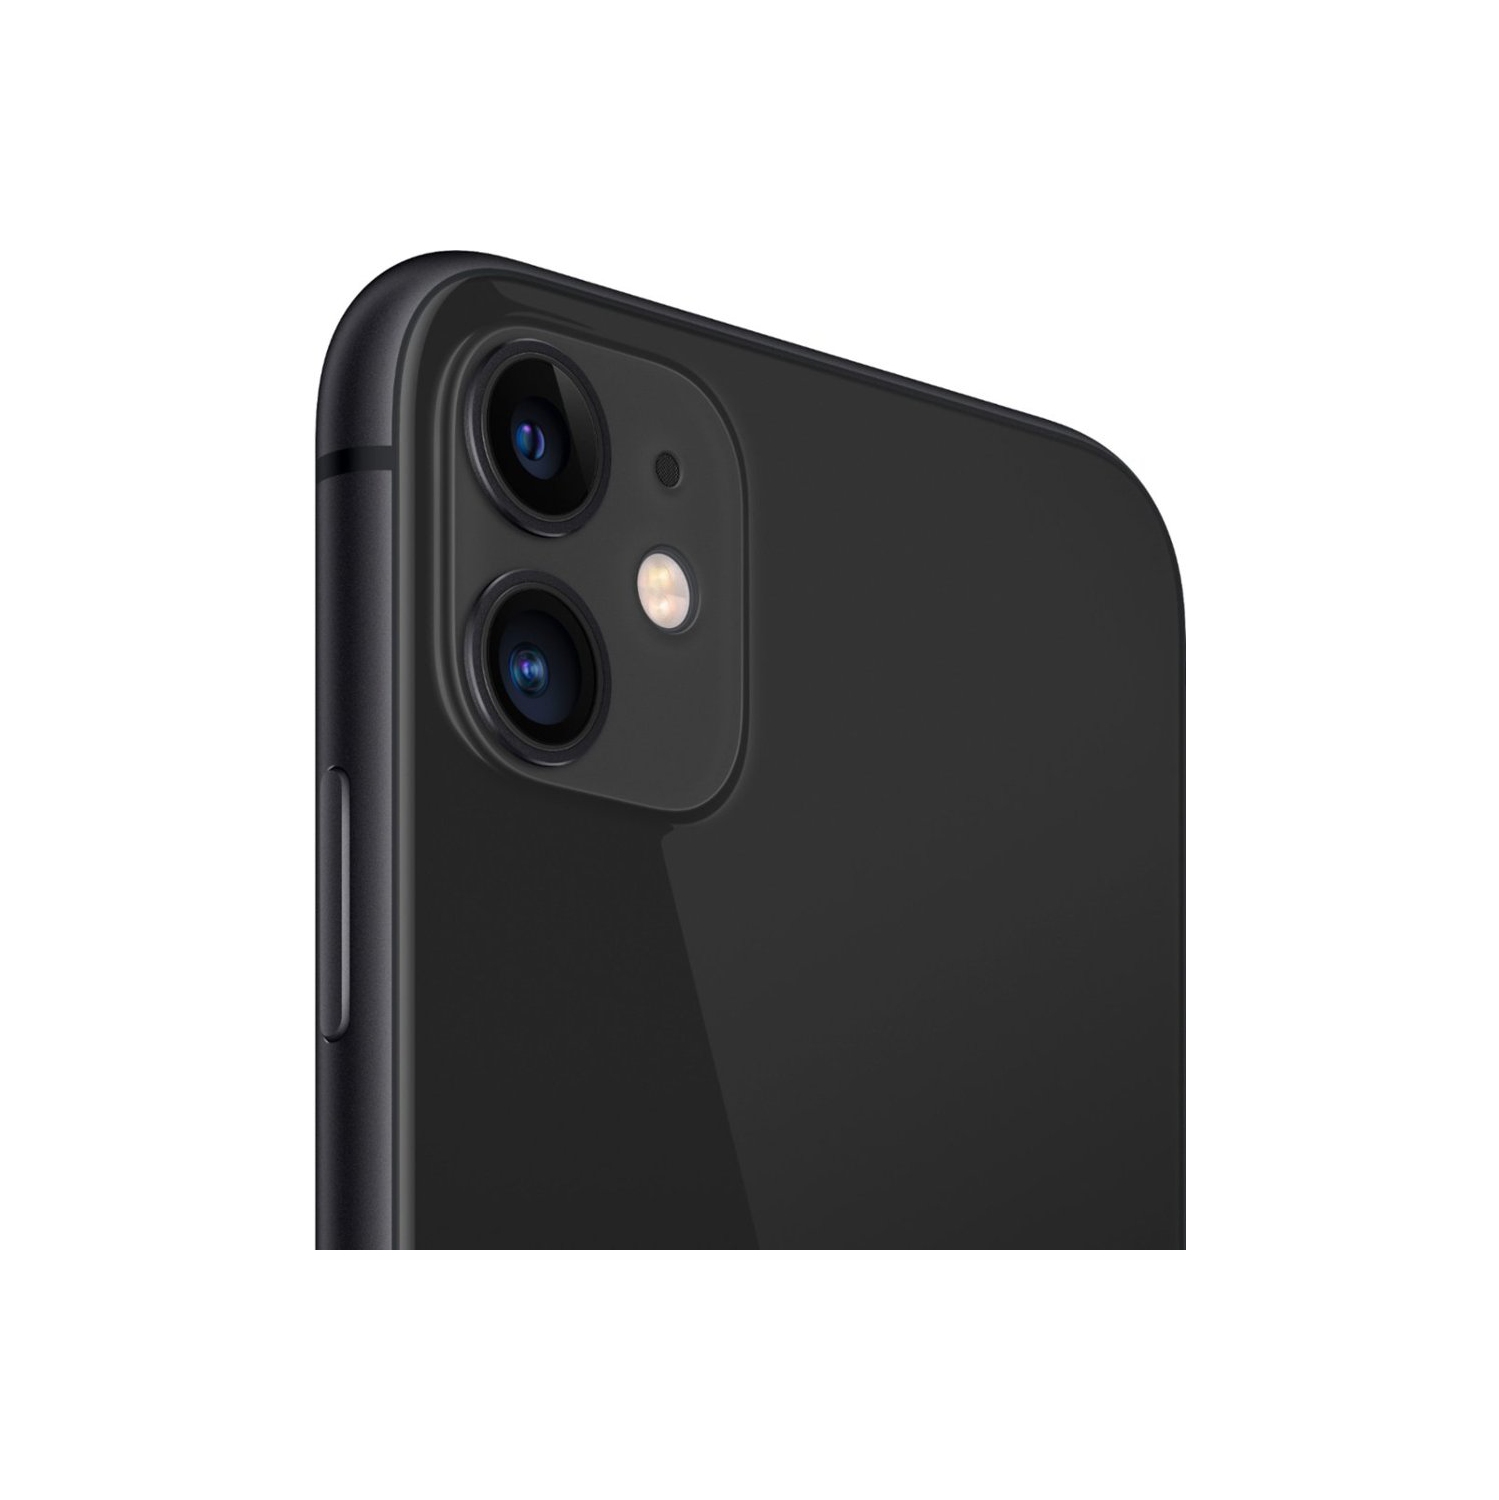 Apple iPhone 11 64GB Smartphone - Black - Unlocked - Open Box